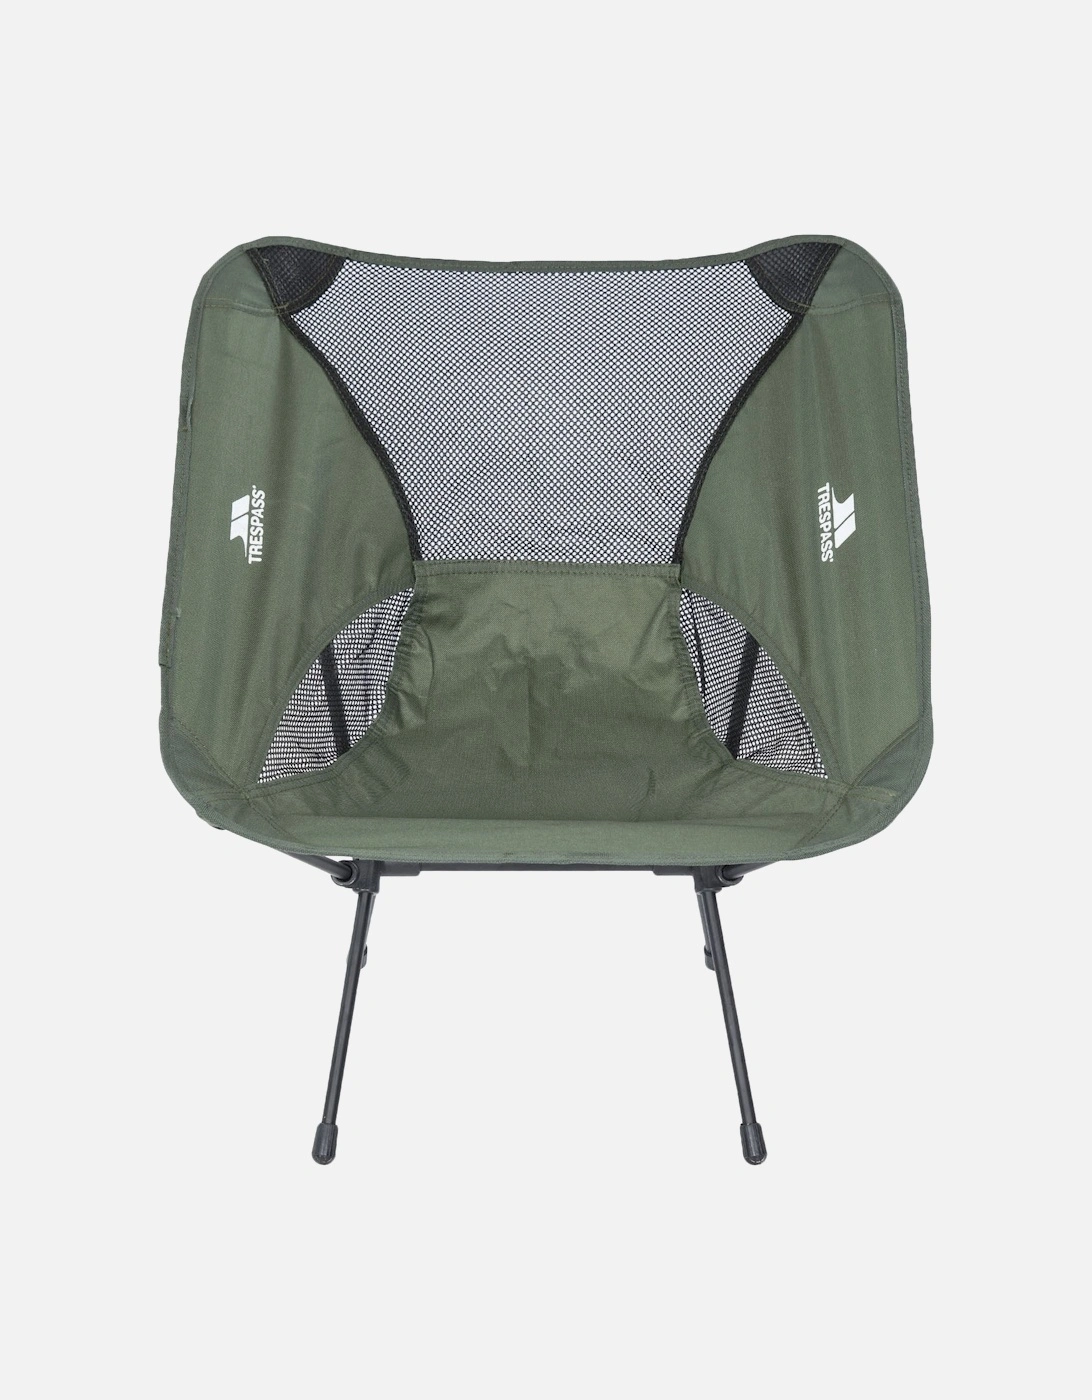 Perch Lightweight Folding Chair - Olive